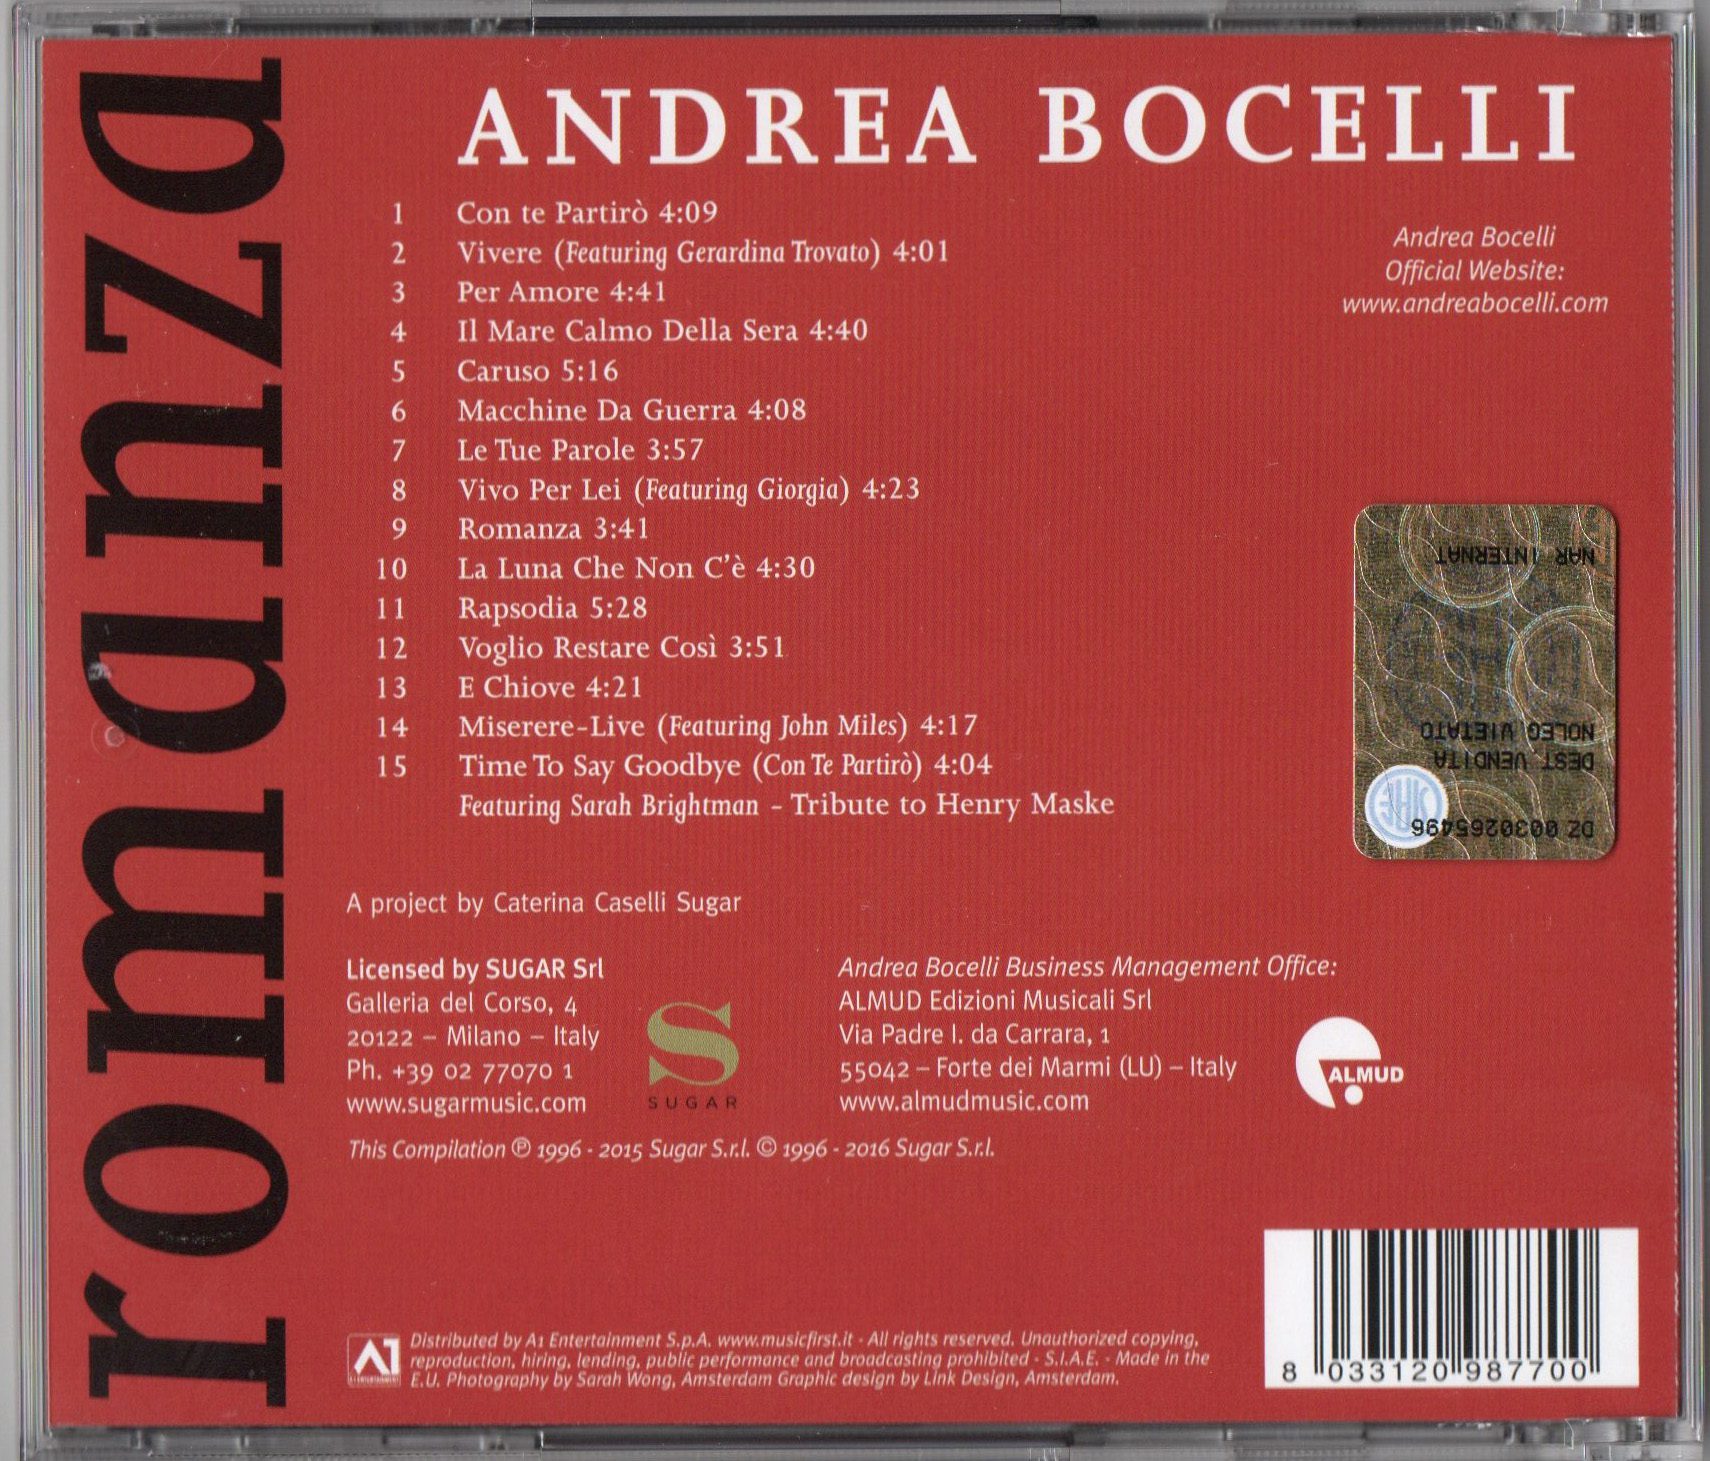 Andrea Bocelli with Ana María Martínez in Central Park - Andrea Bocelli  in - Classic FM